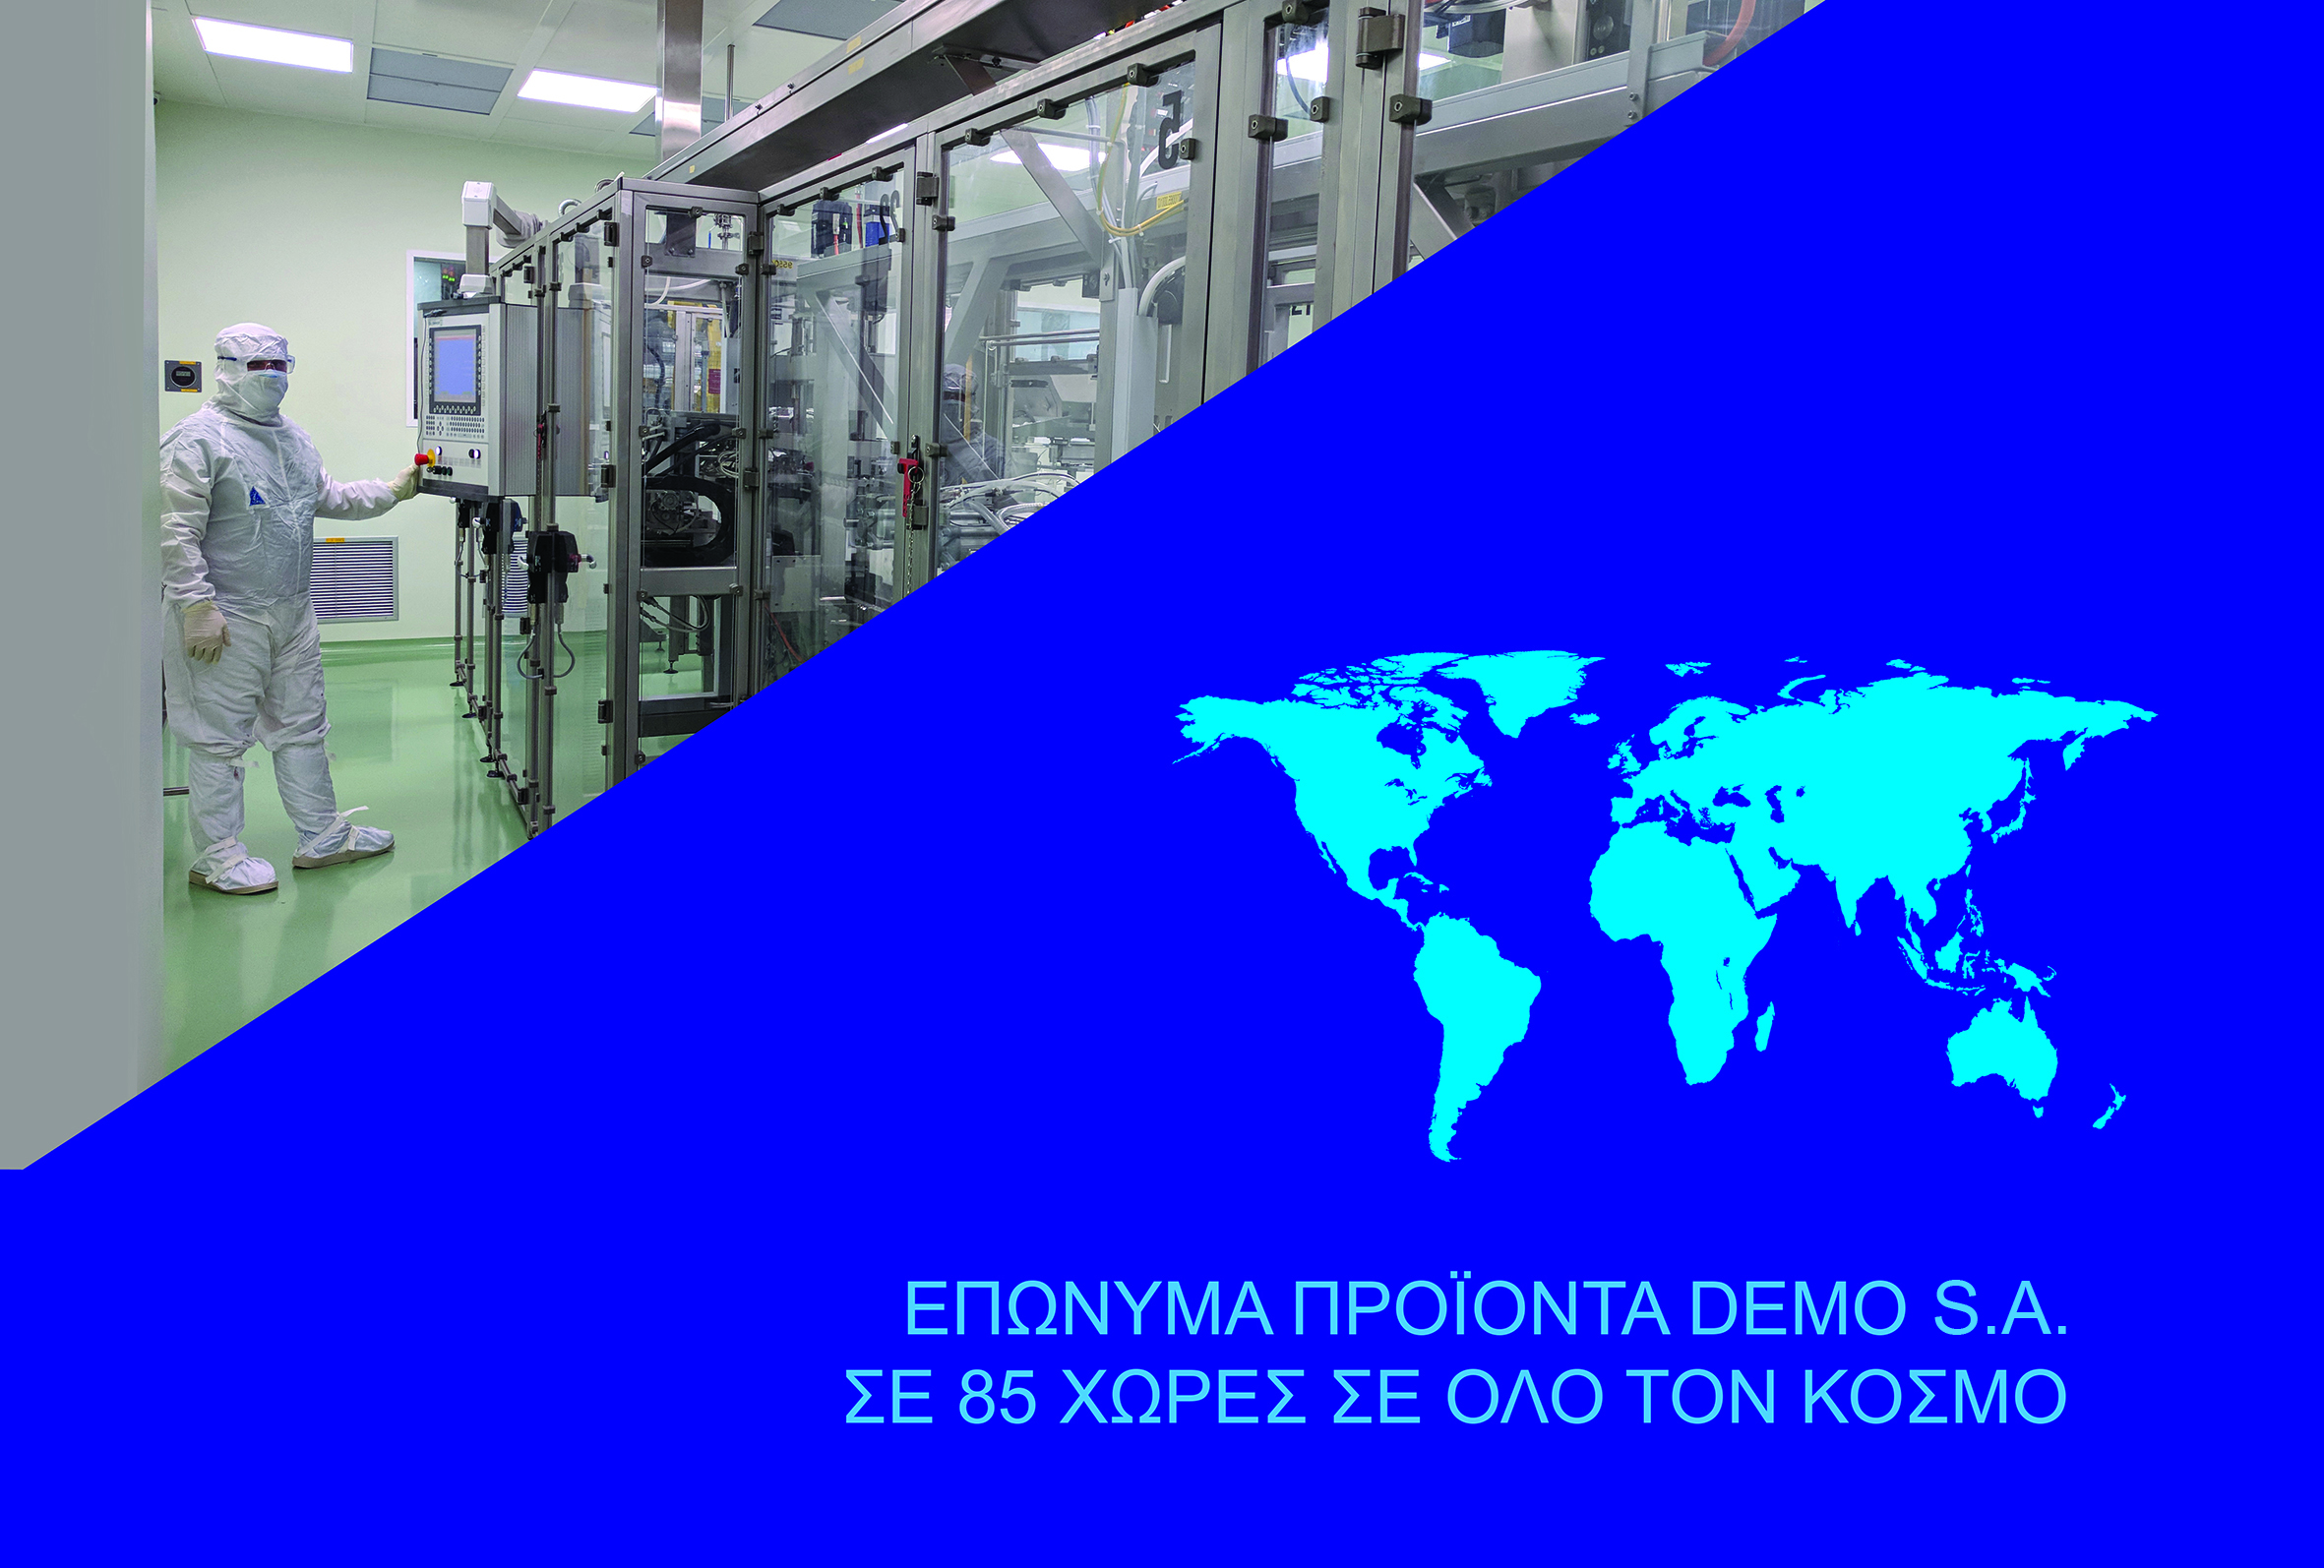 DEMO ABEE: Μια βιομηχανία που επενδύει στην Ελλάδα με αιχμή τις εξαγωγές